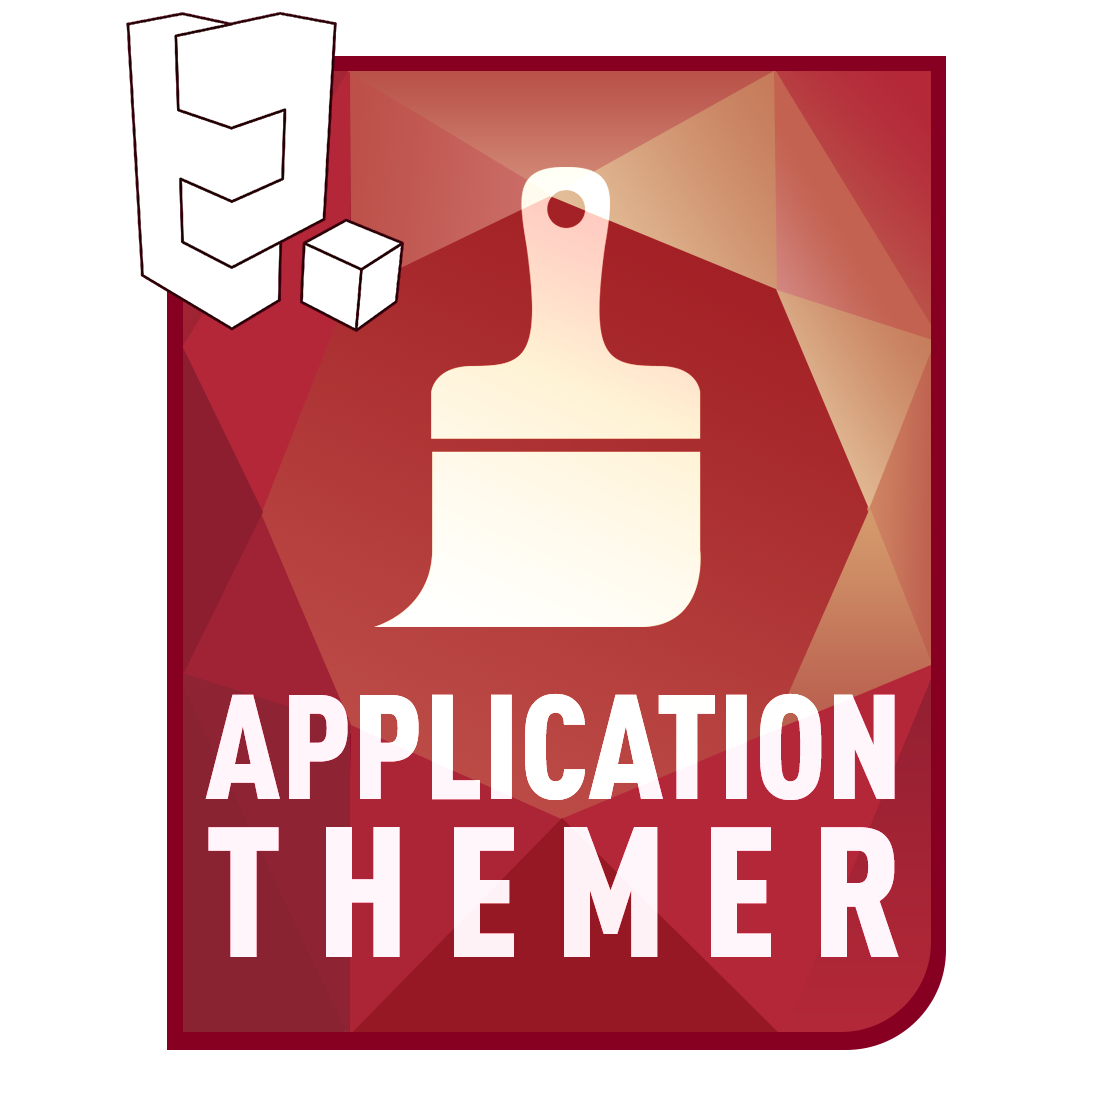 Rails App Themer